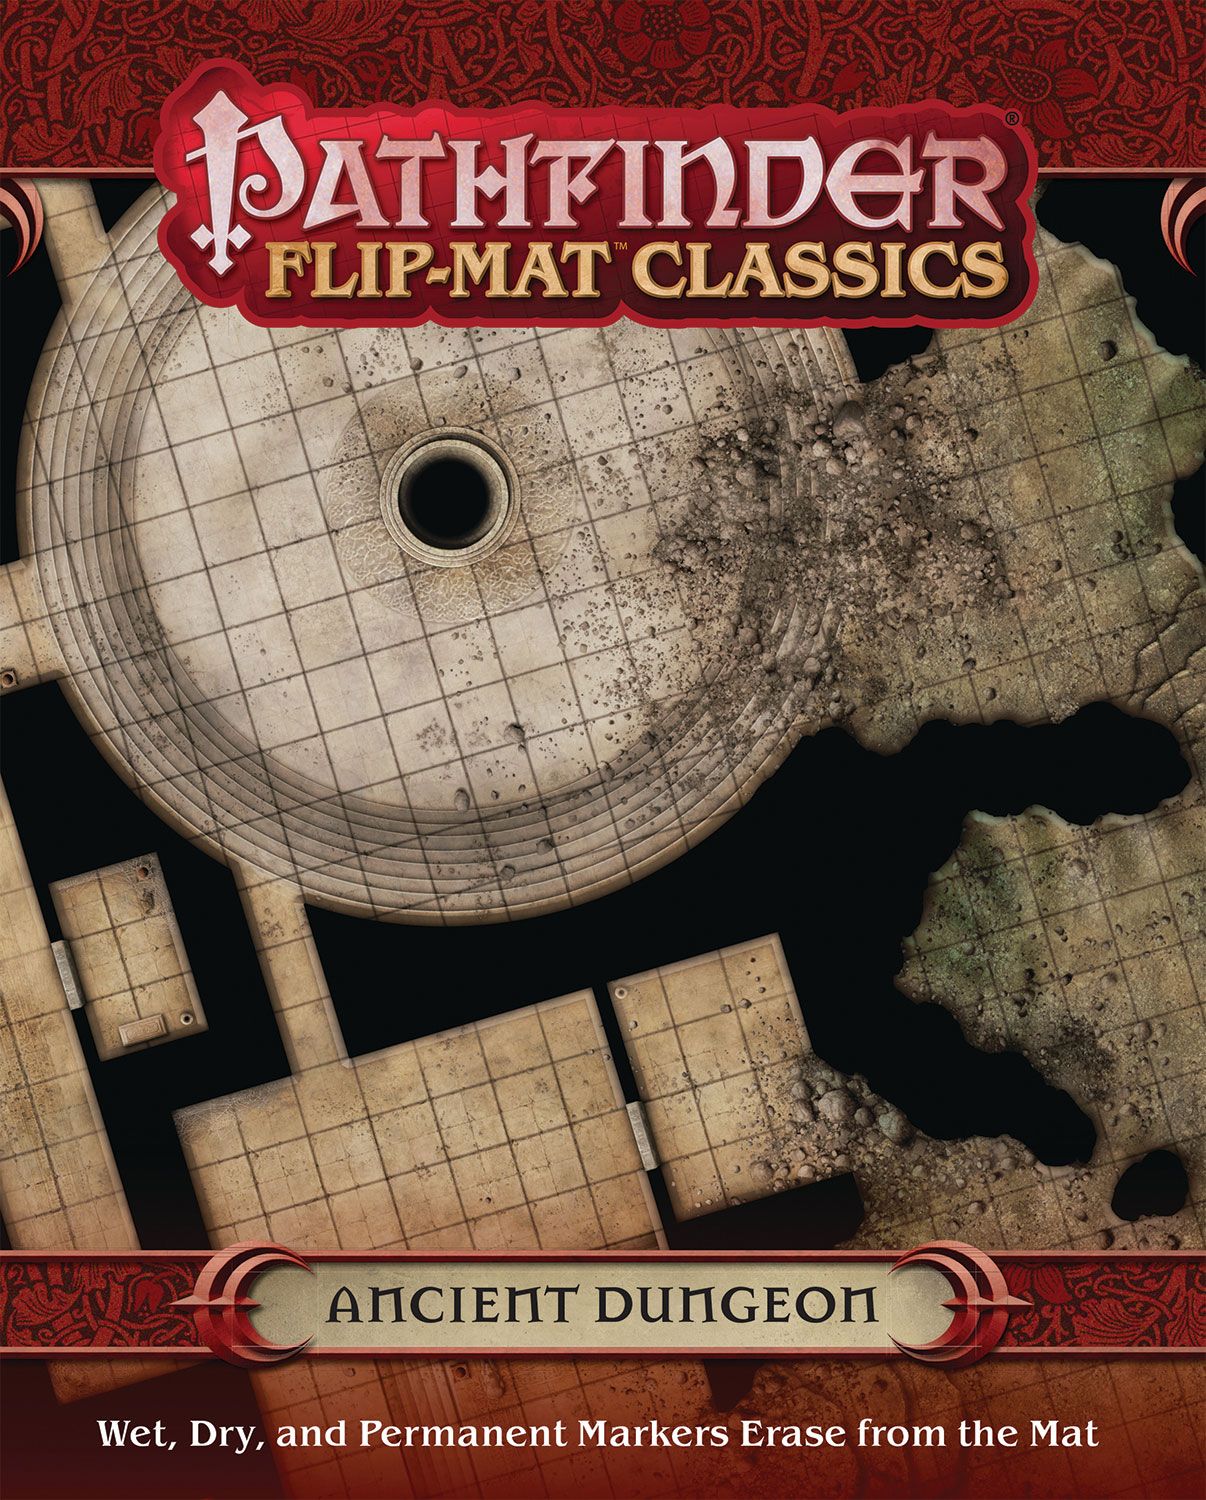 Pathfinder Accessories Flip Mat Classics Ancient Dungeon